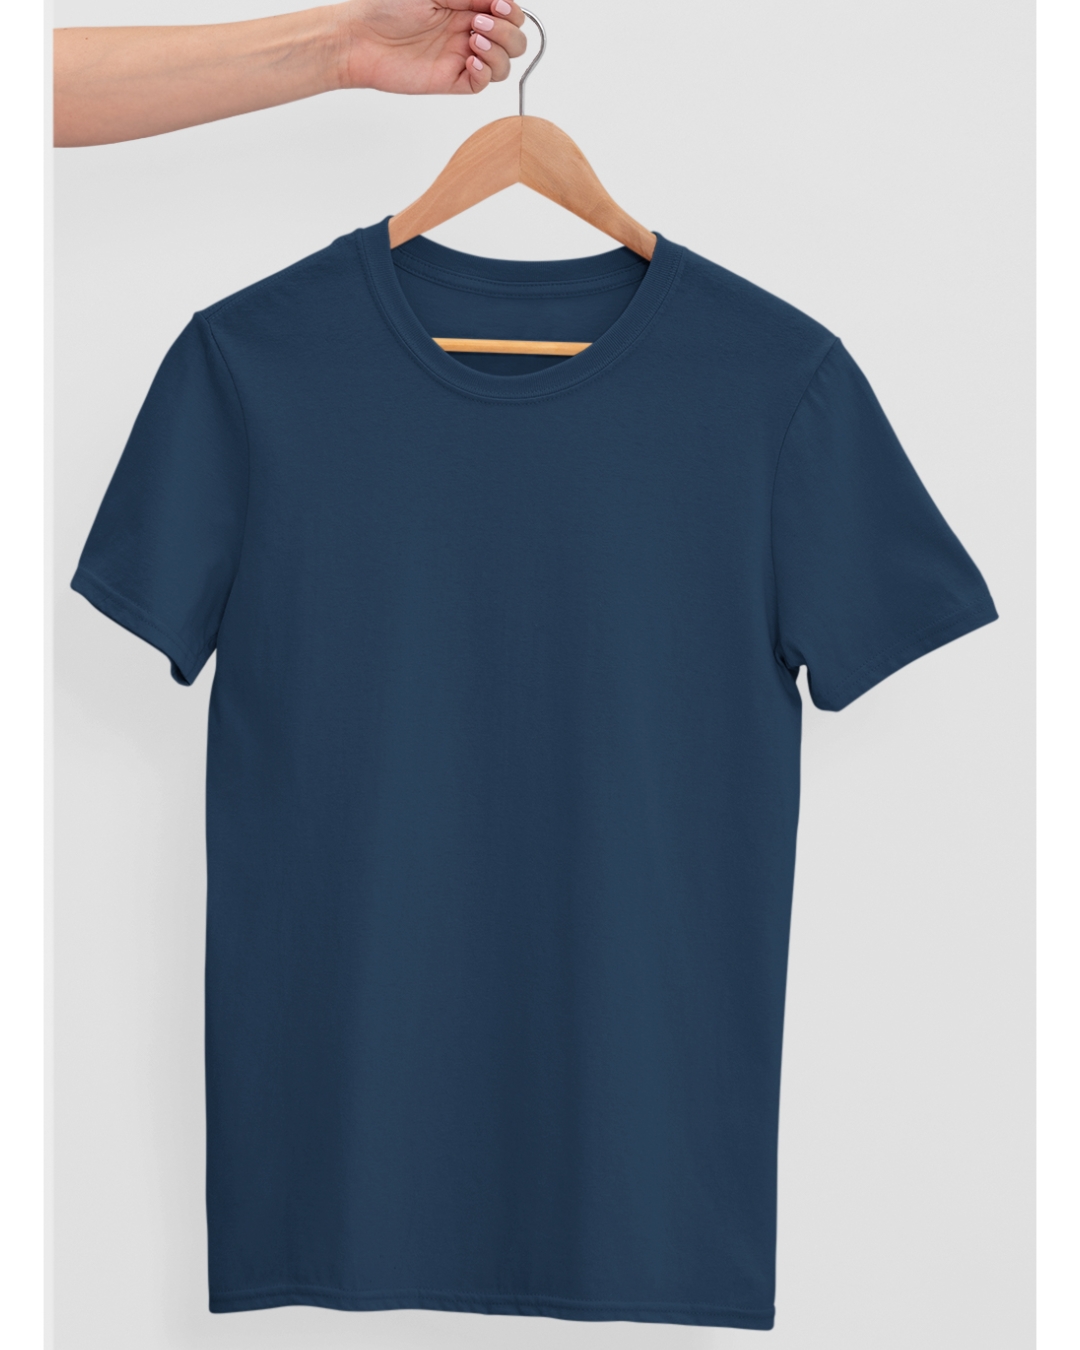 TFM Basic Plain Round Neck Half Sleeve Navy Blue T-Shirt - Forever ...